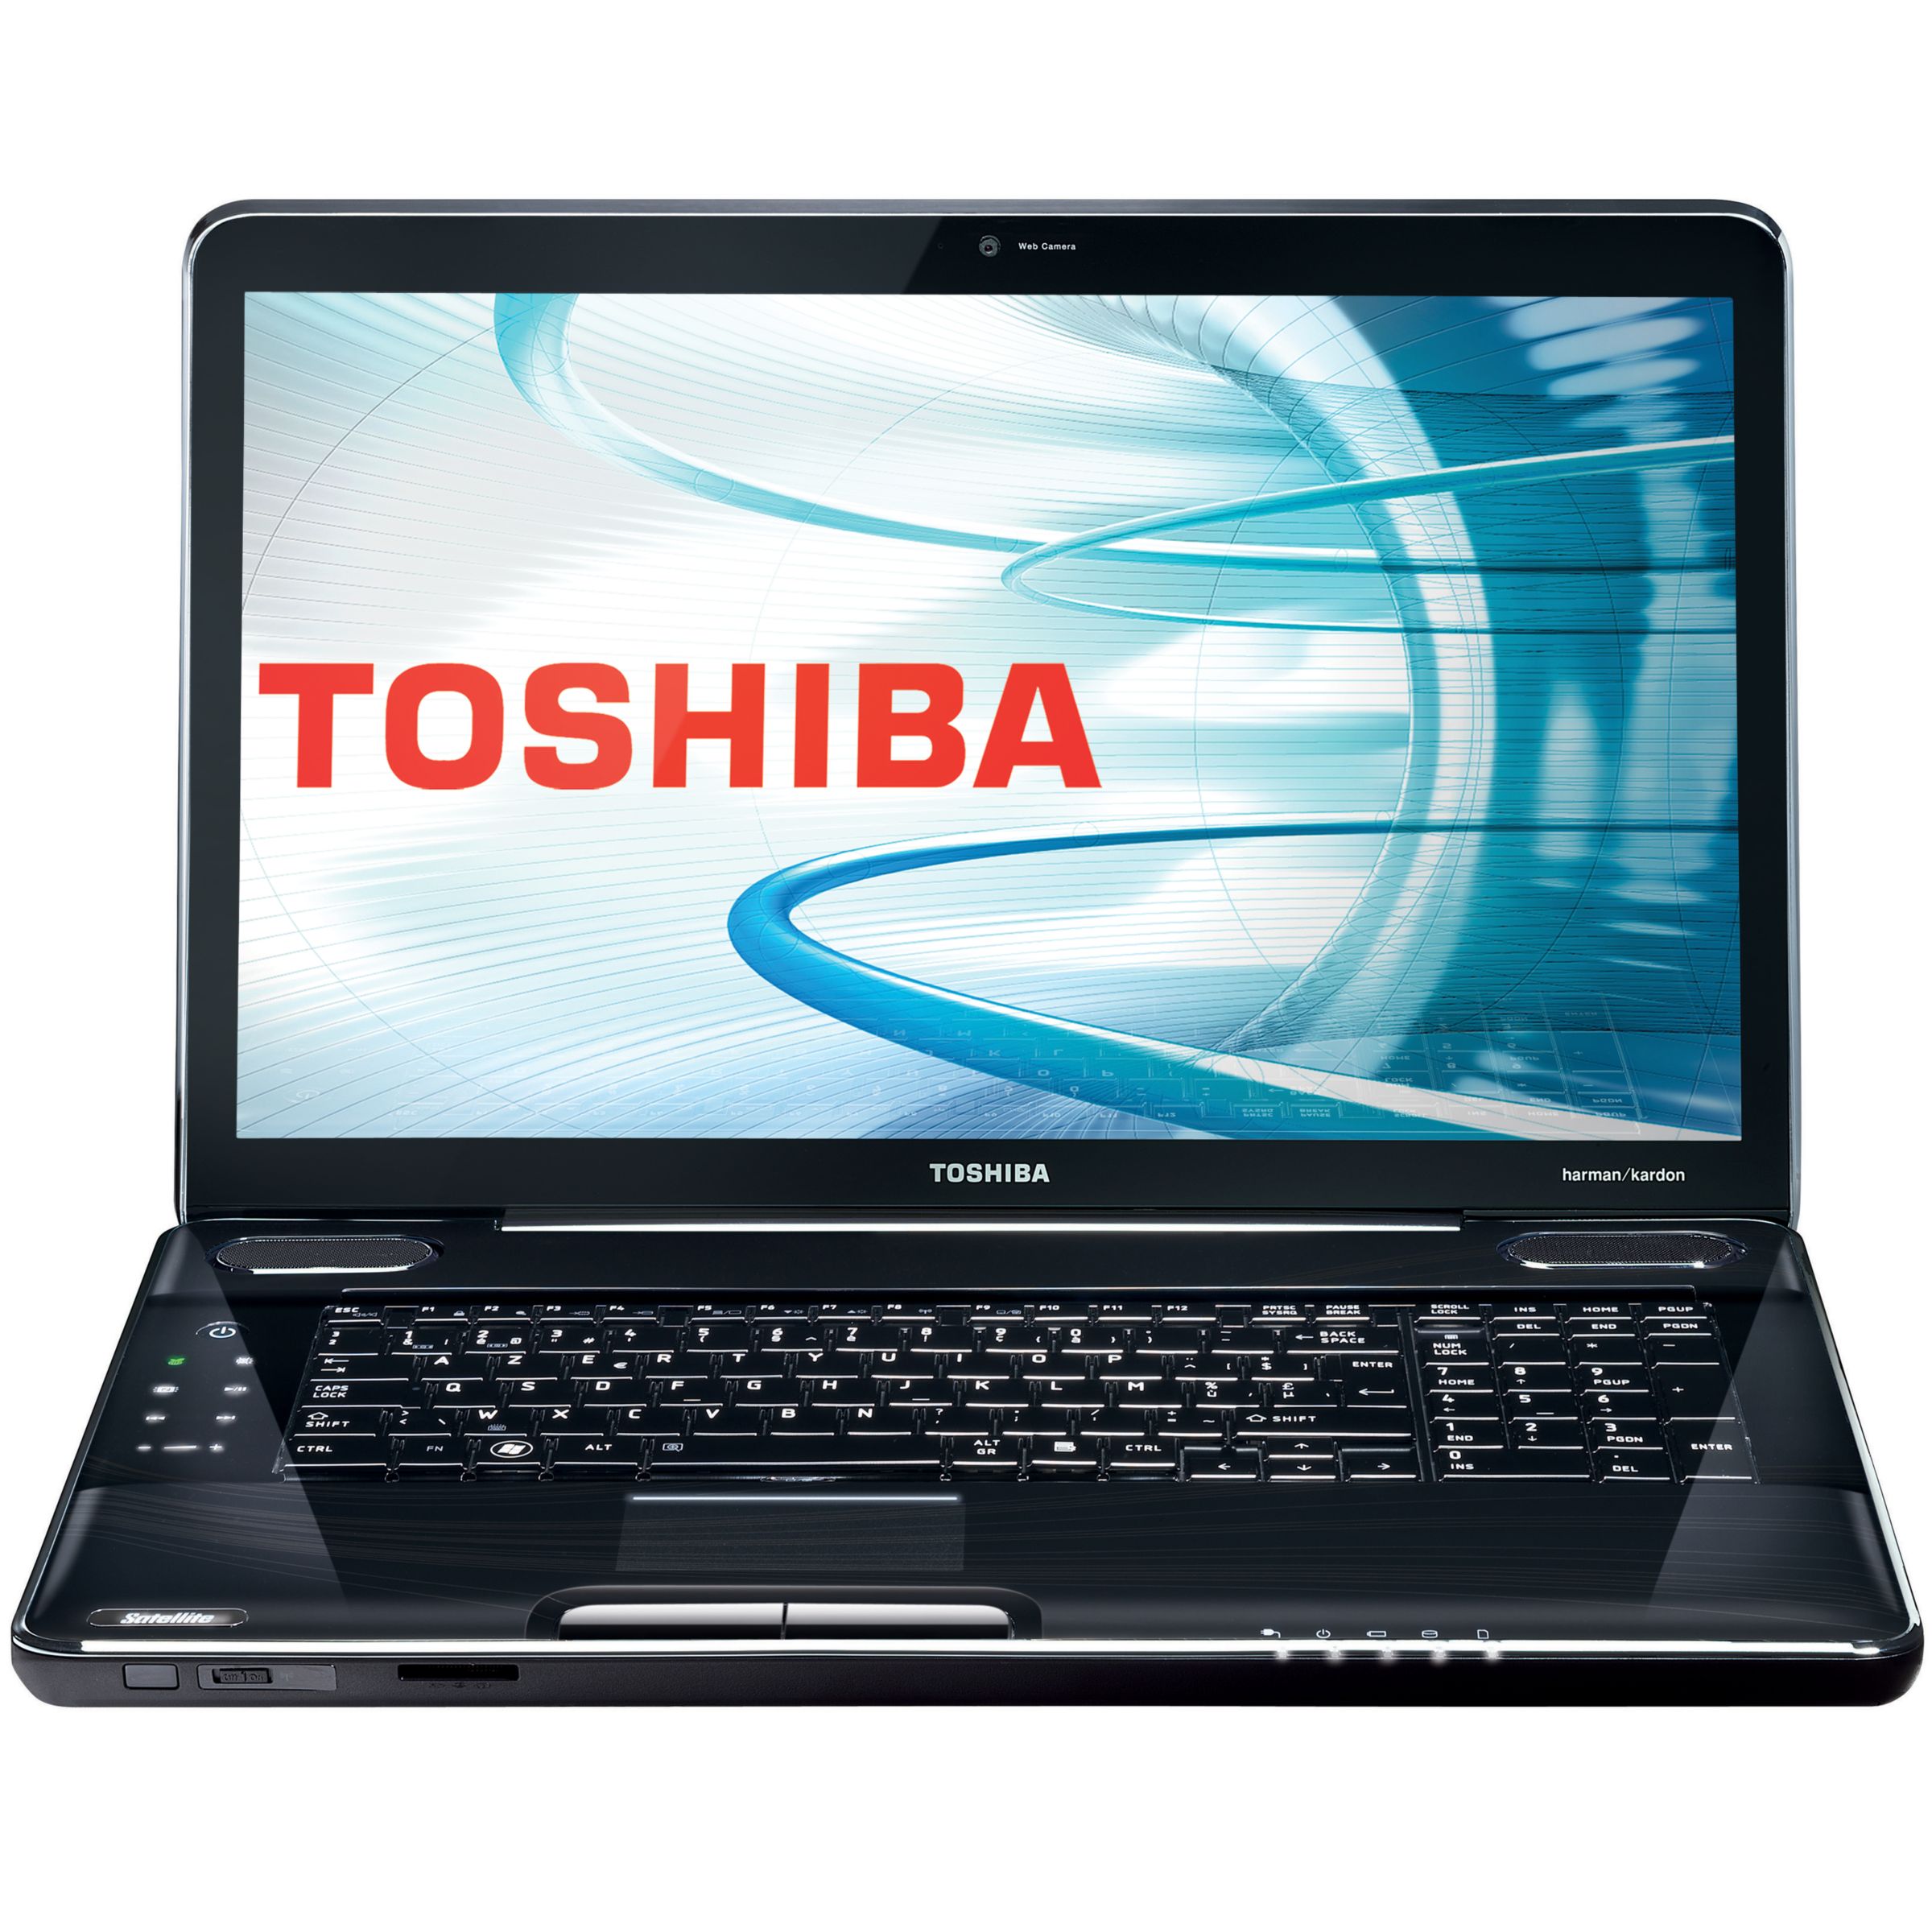 Toshiba Satellite P500-1DT Laptop, Intel Core i5, 500GB, 2.4GHz, 4GB RAM with 18.4 Inch Display at John Lewis